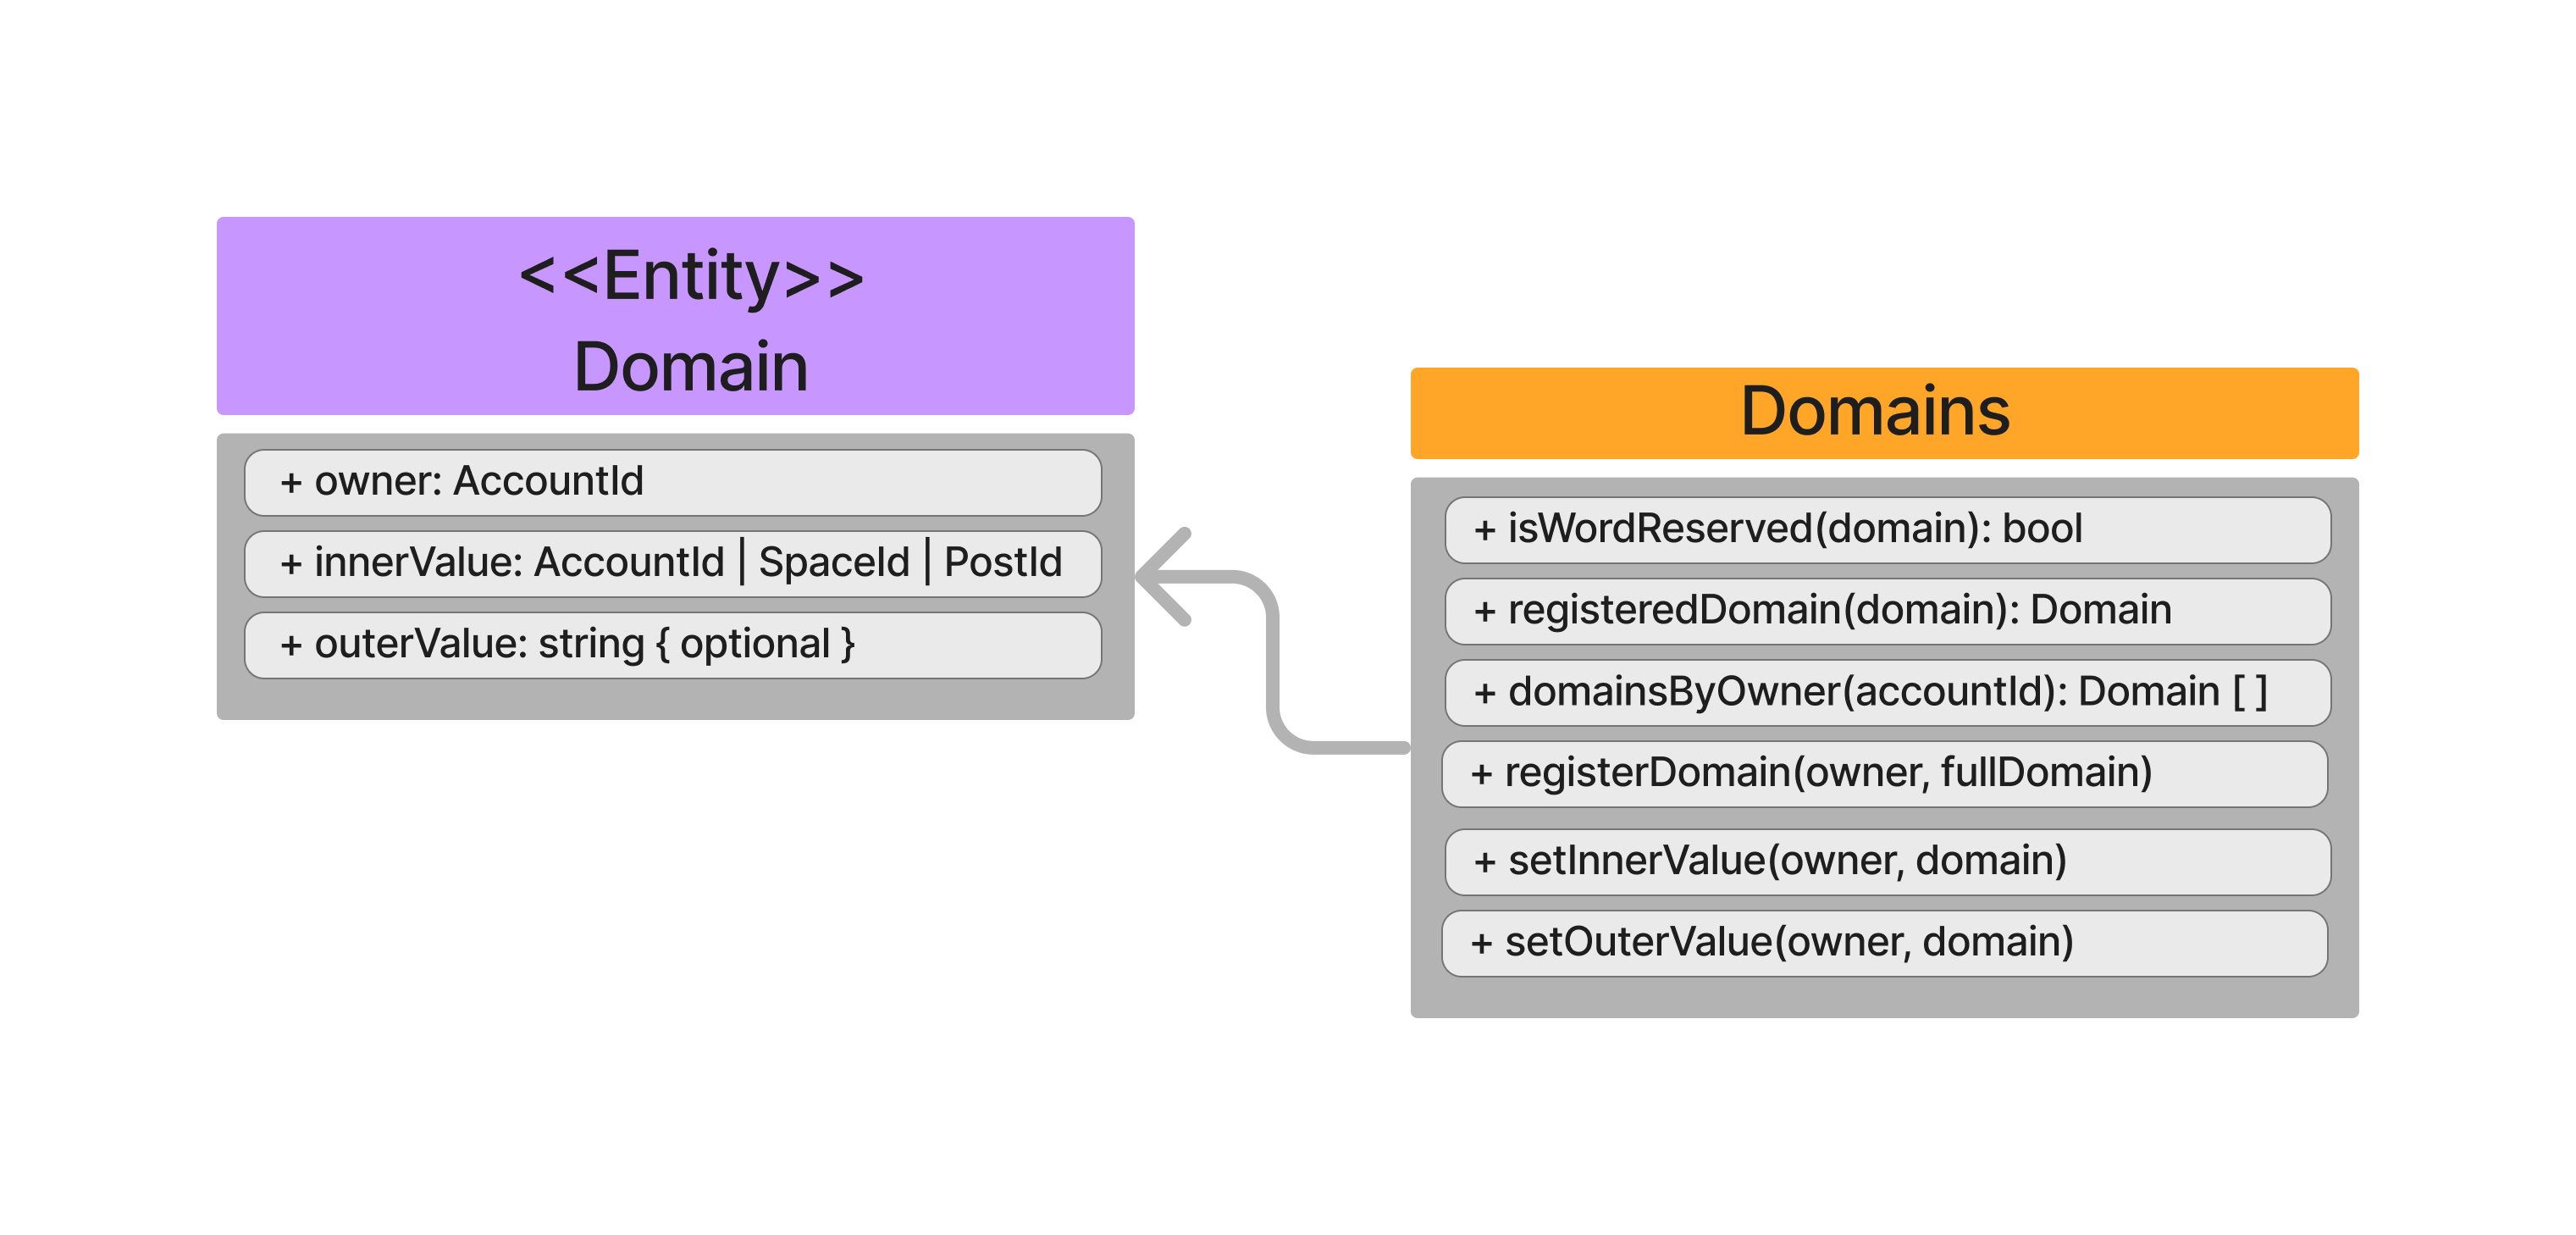 Domains-UML